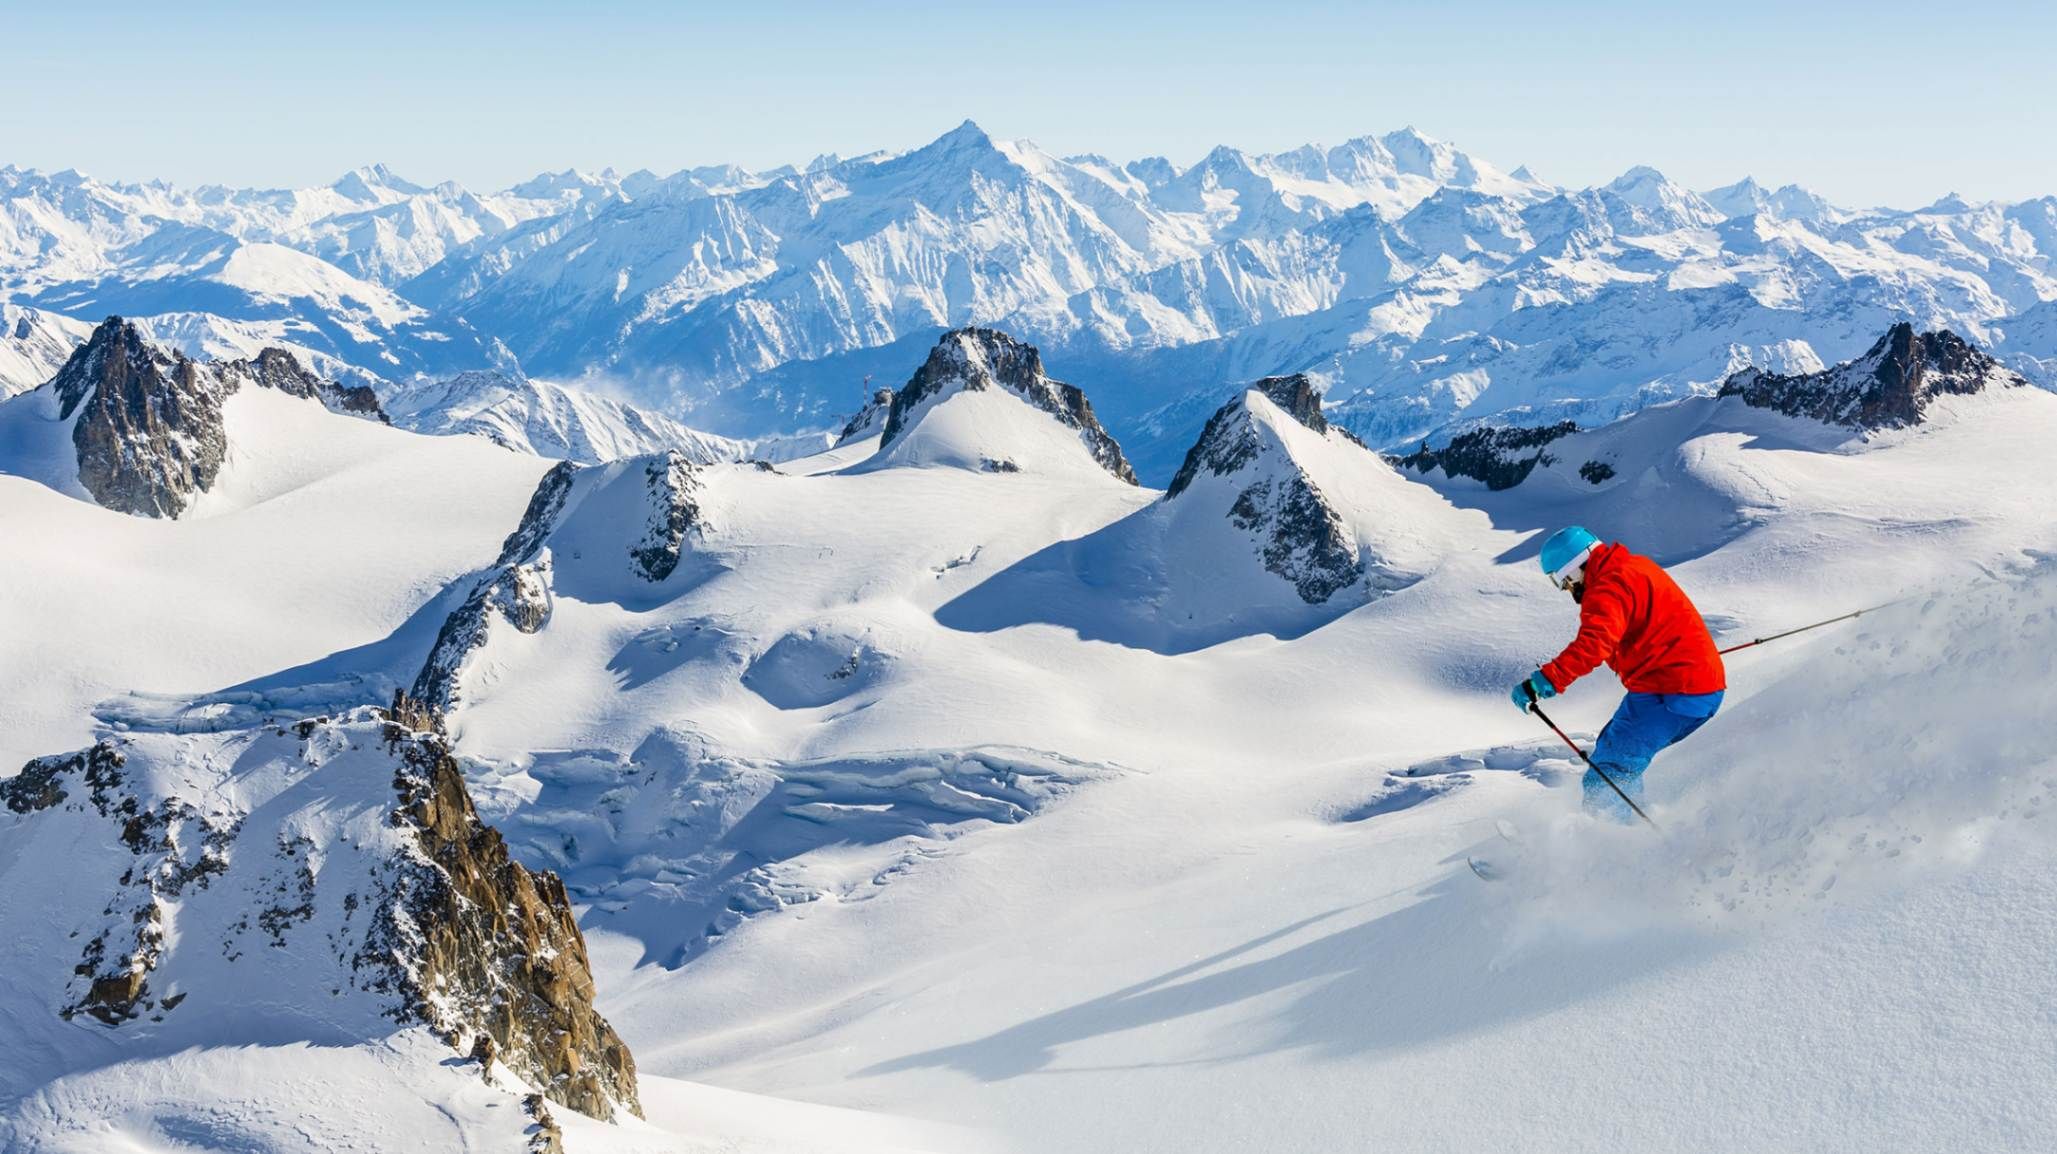 Skiing in Chamonix during winter season